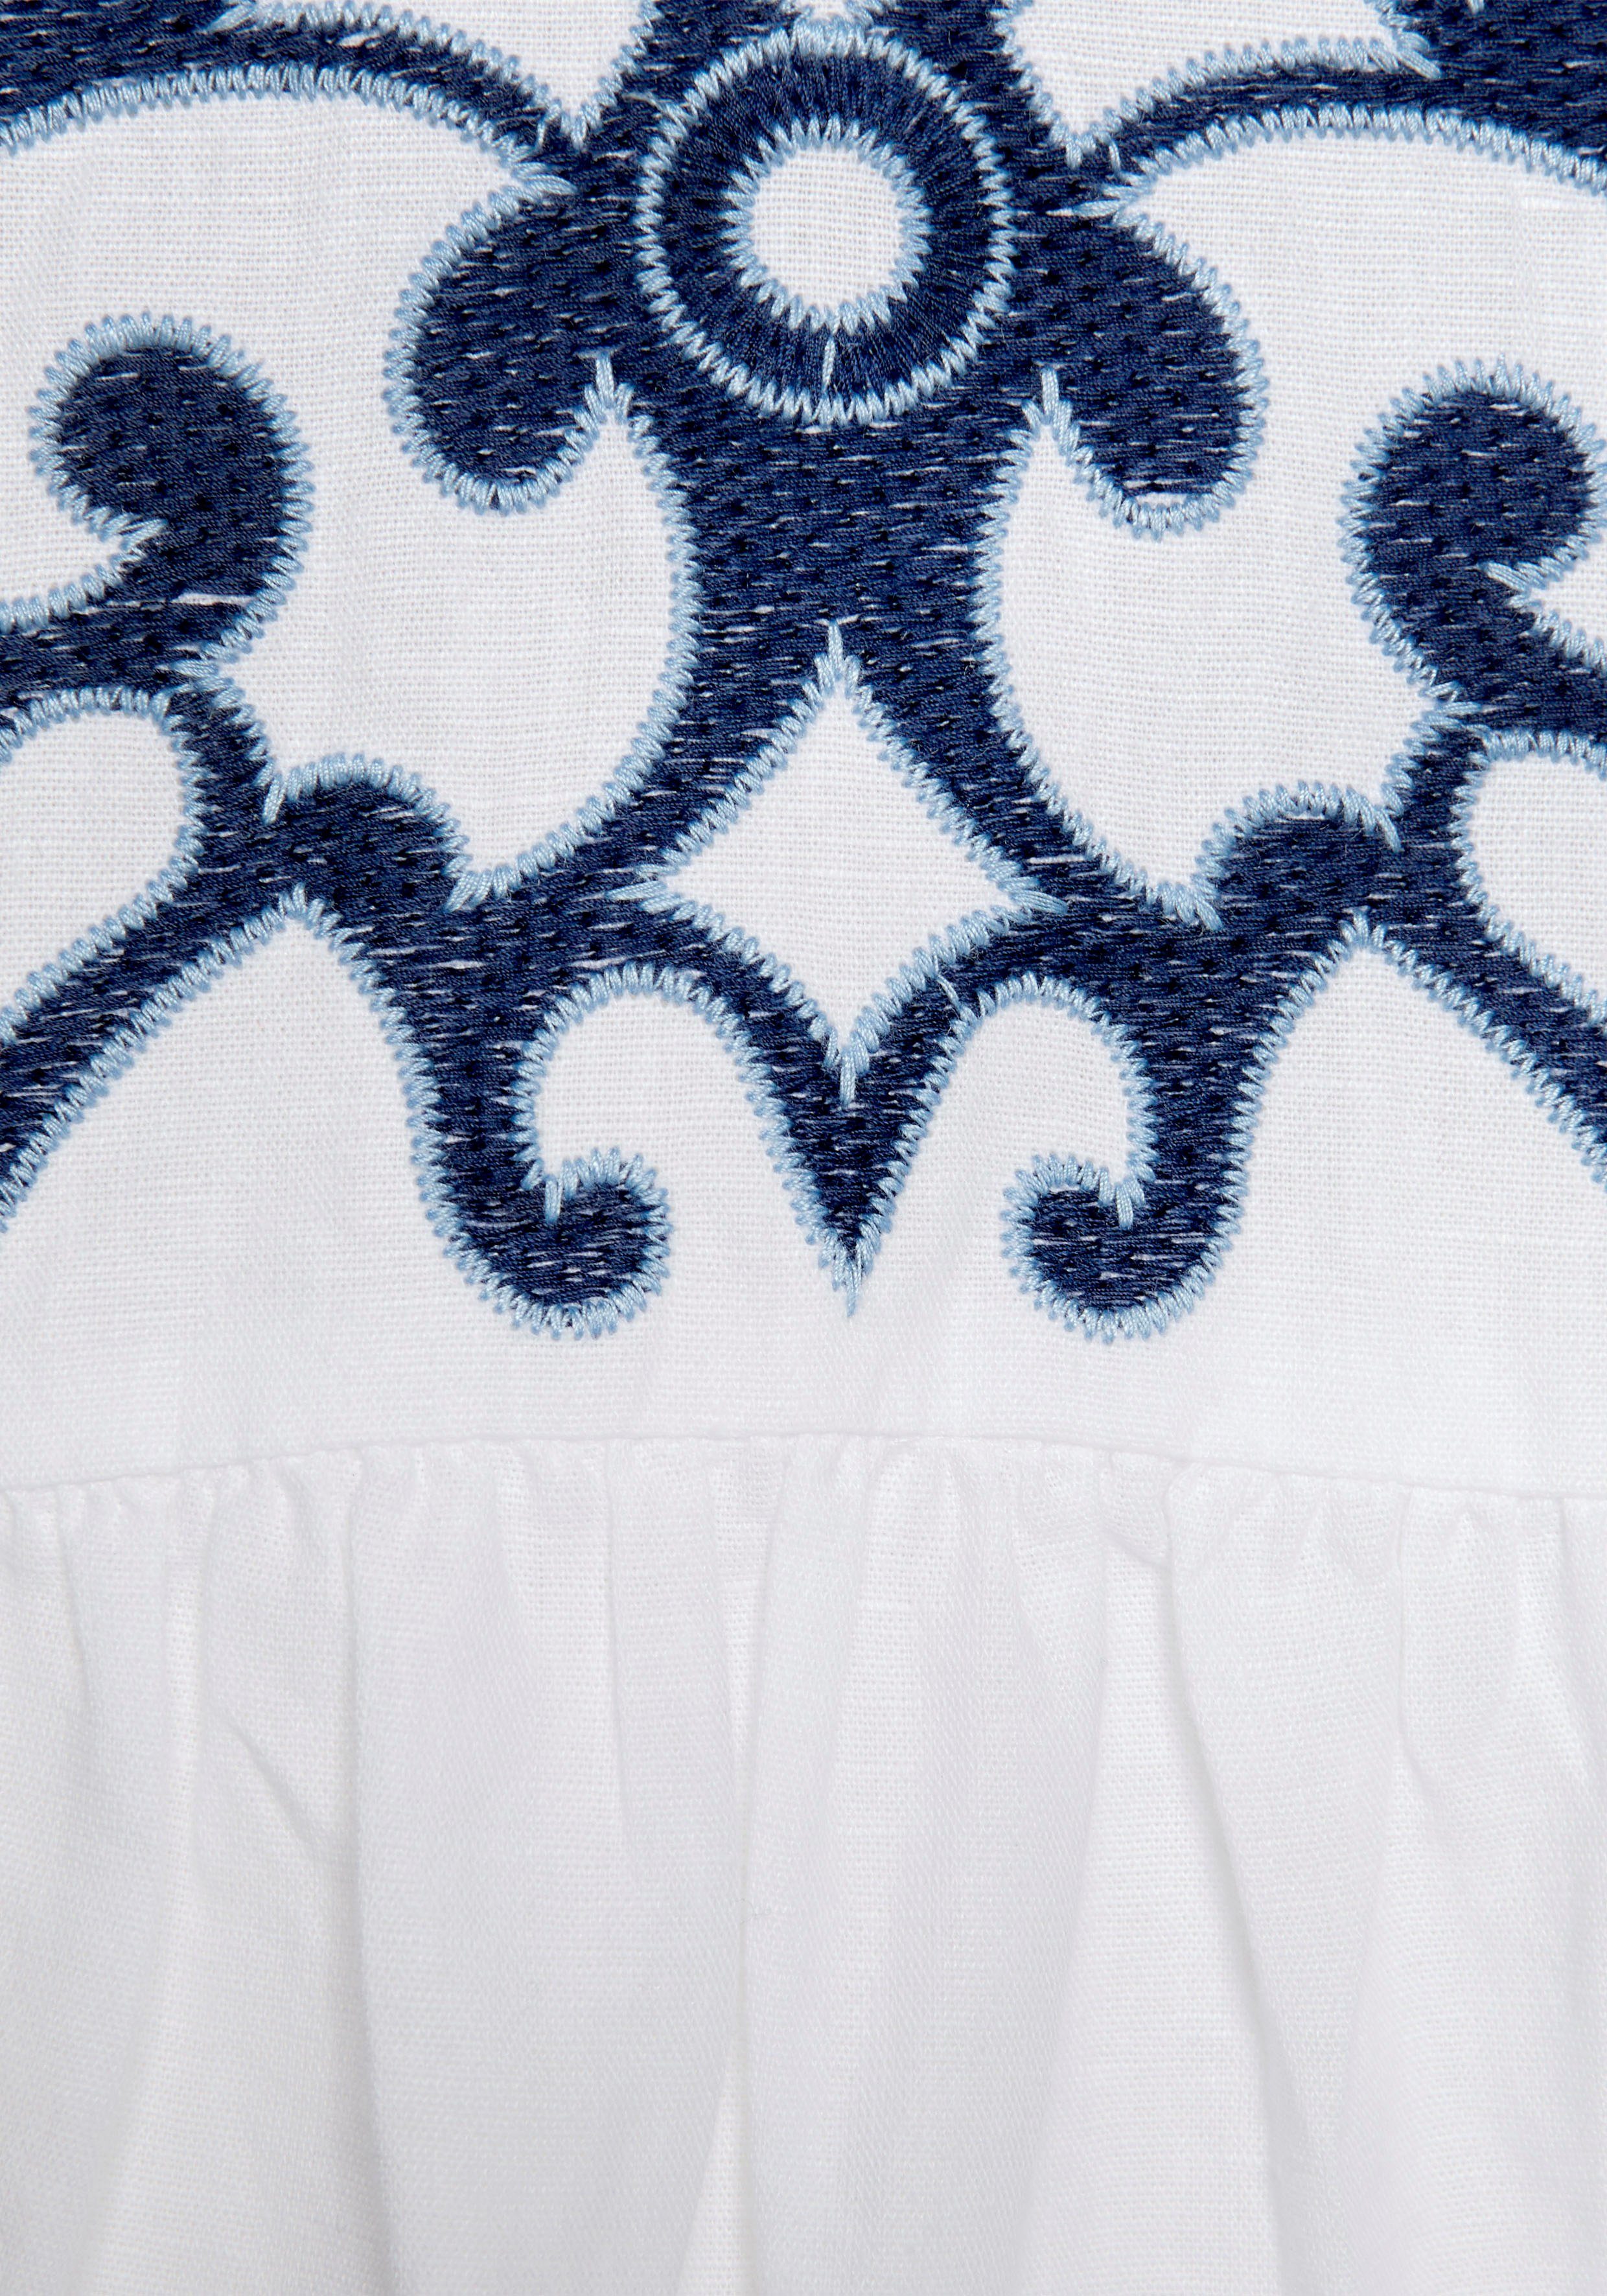 LASCANA Langarmbluse mit aufwendiger Tunika weiß-blau Stickerei, Damenbluse